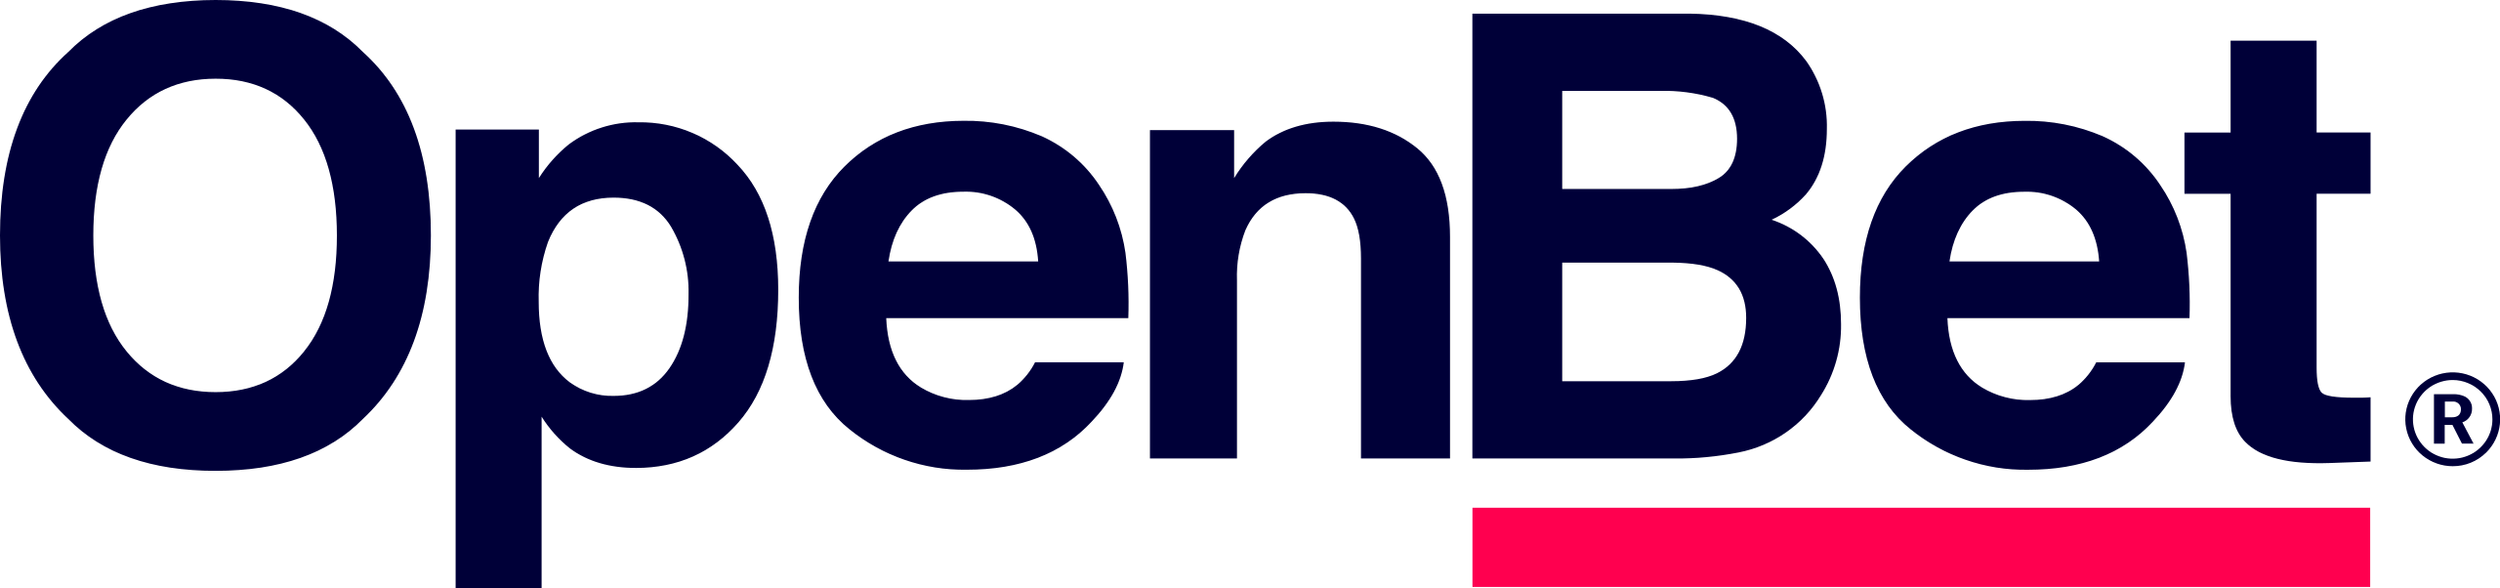 OpenBet_logo_2021.svg.png